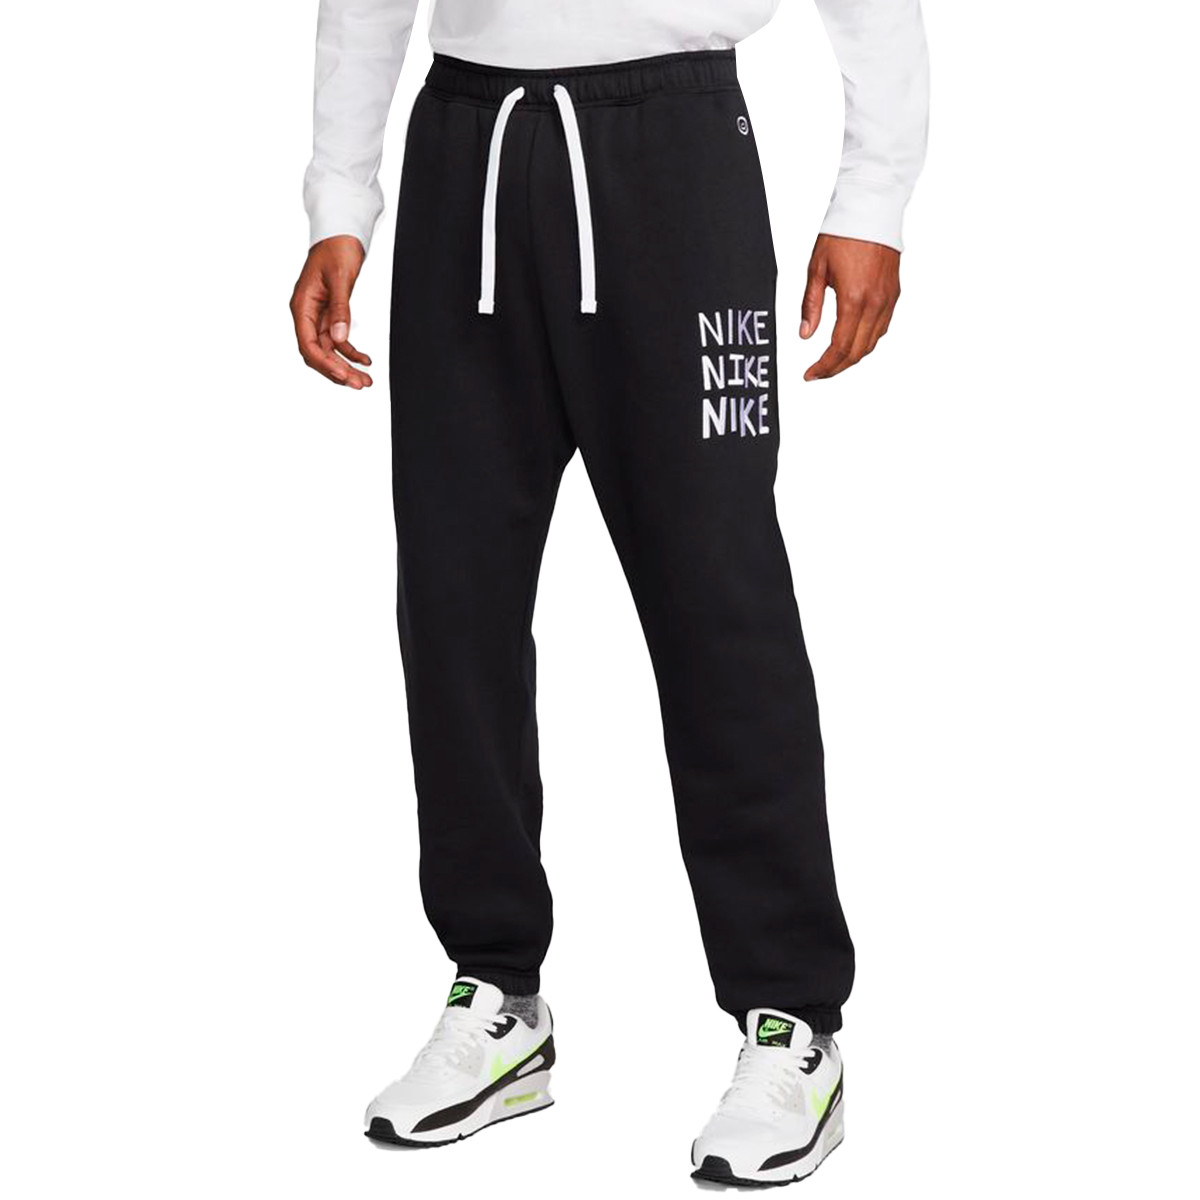 Maestro parrilla luz de sol Pantalón largo Nike Sportswear Have a Nike Black-White - Fútbol Emotion